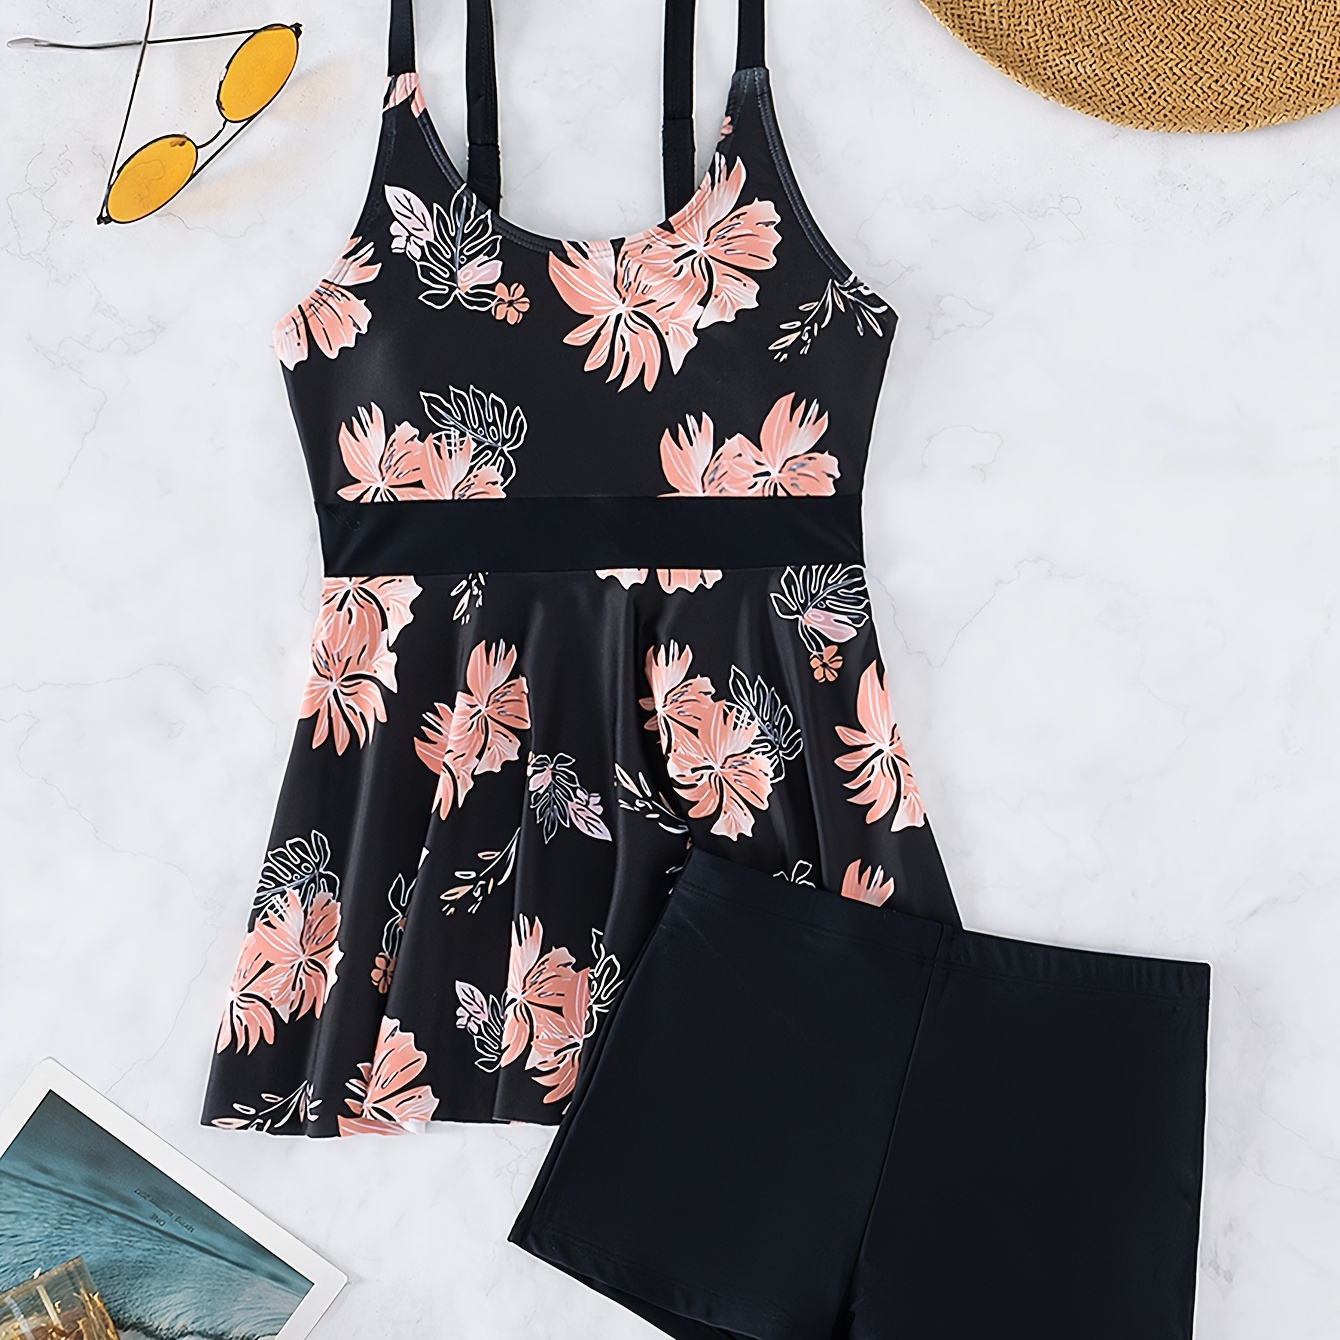 

Floral Print Scoop Neck Stretchy Tankini, Adjustable Straps Shorts Black & Peach Color 2 Piece Swimsuit, Classic & Elegant, Women's Swimwear & Clothing